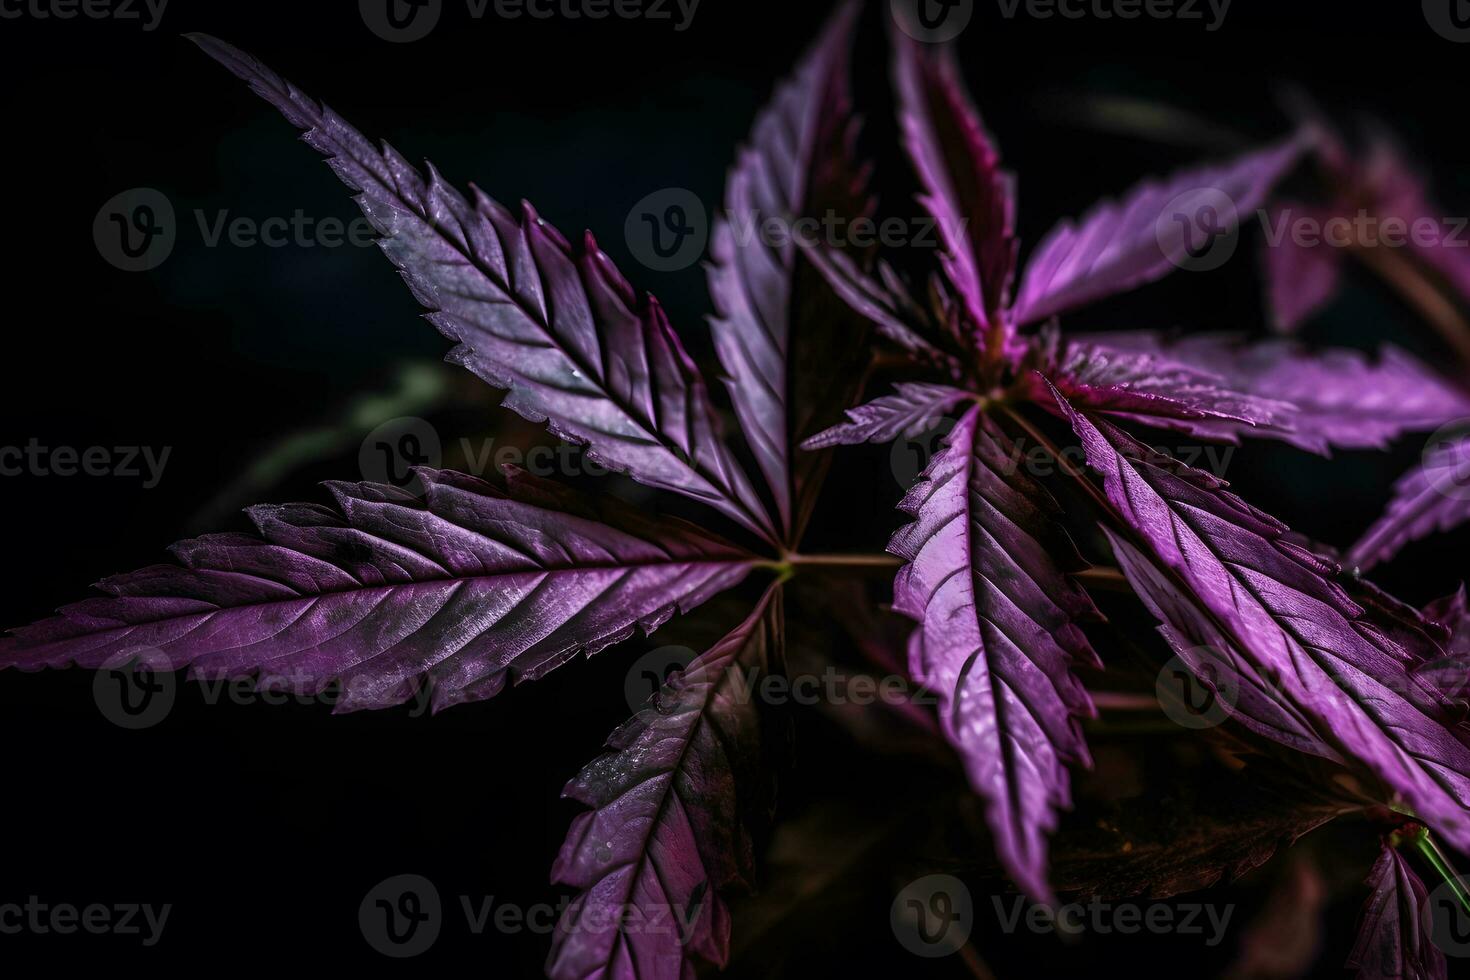 Purple cannabis leaf on a dark background. Neural network AI generated photo